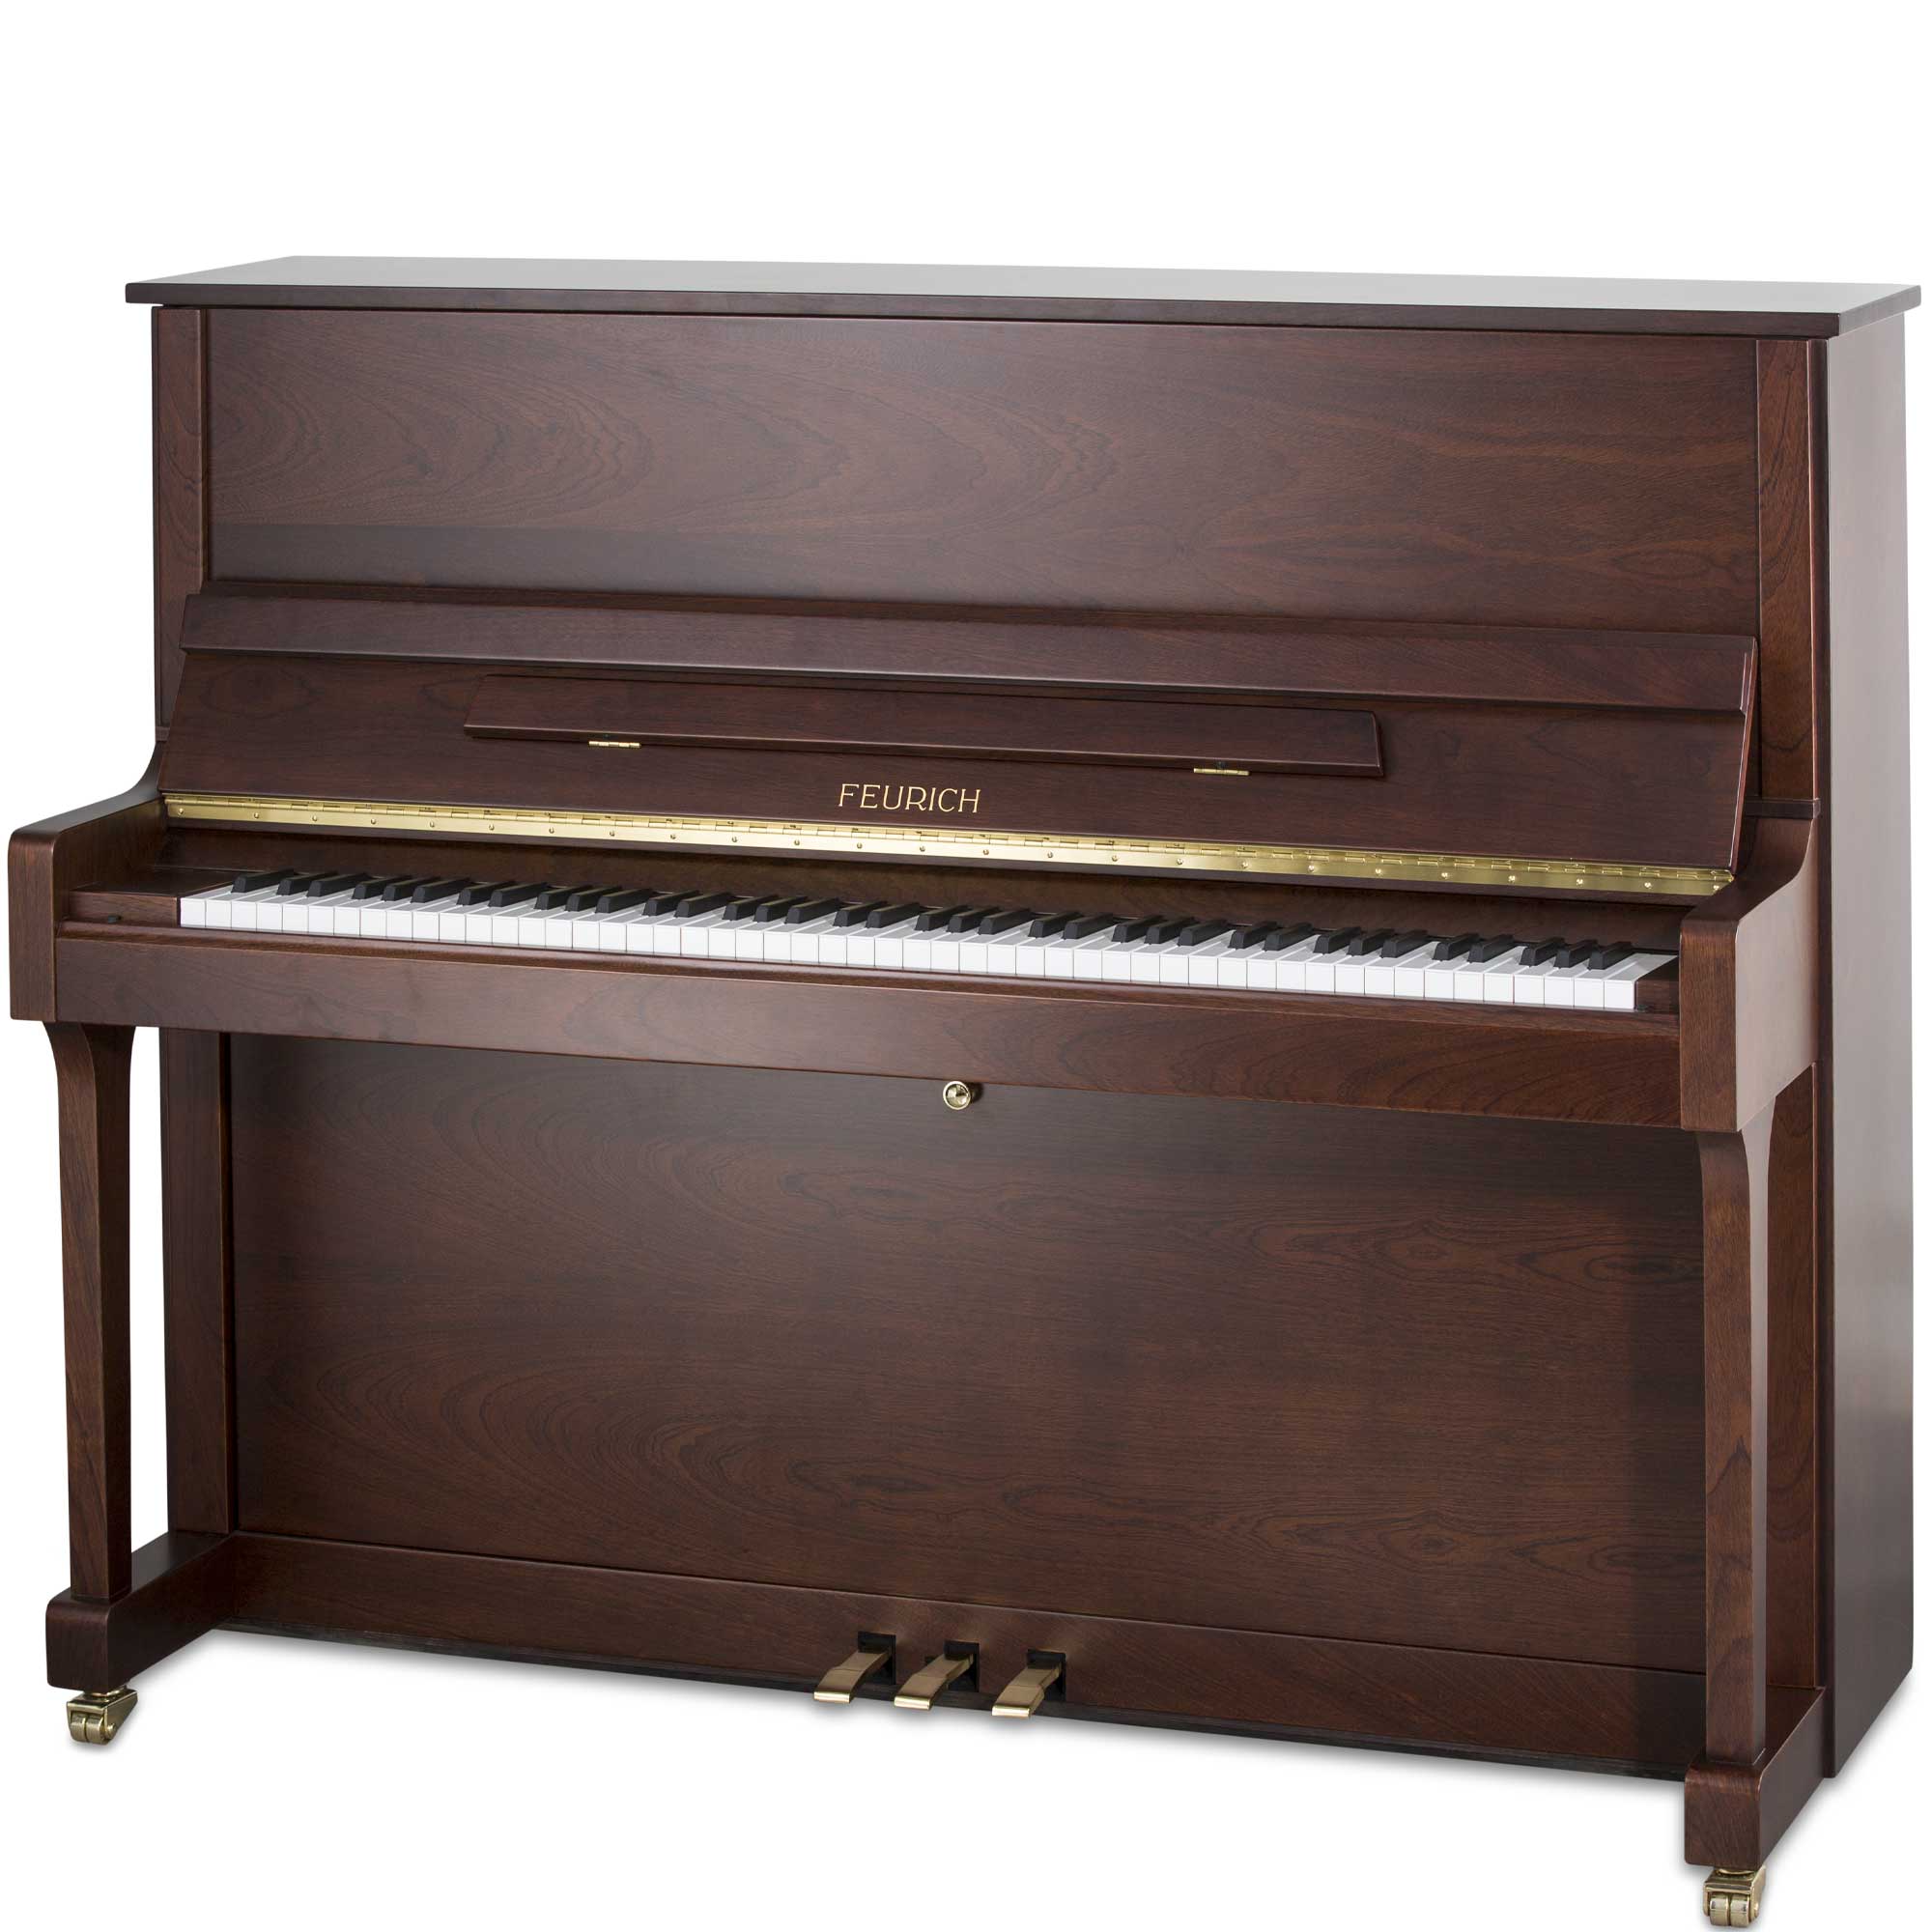 Feurich Klavier zum Mieten Modell 122 in Farbe Nuss